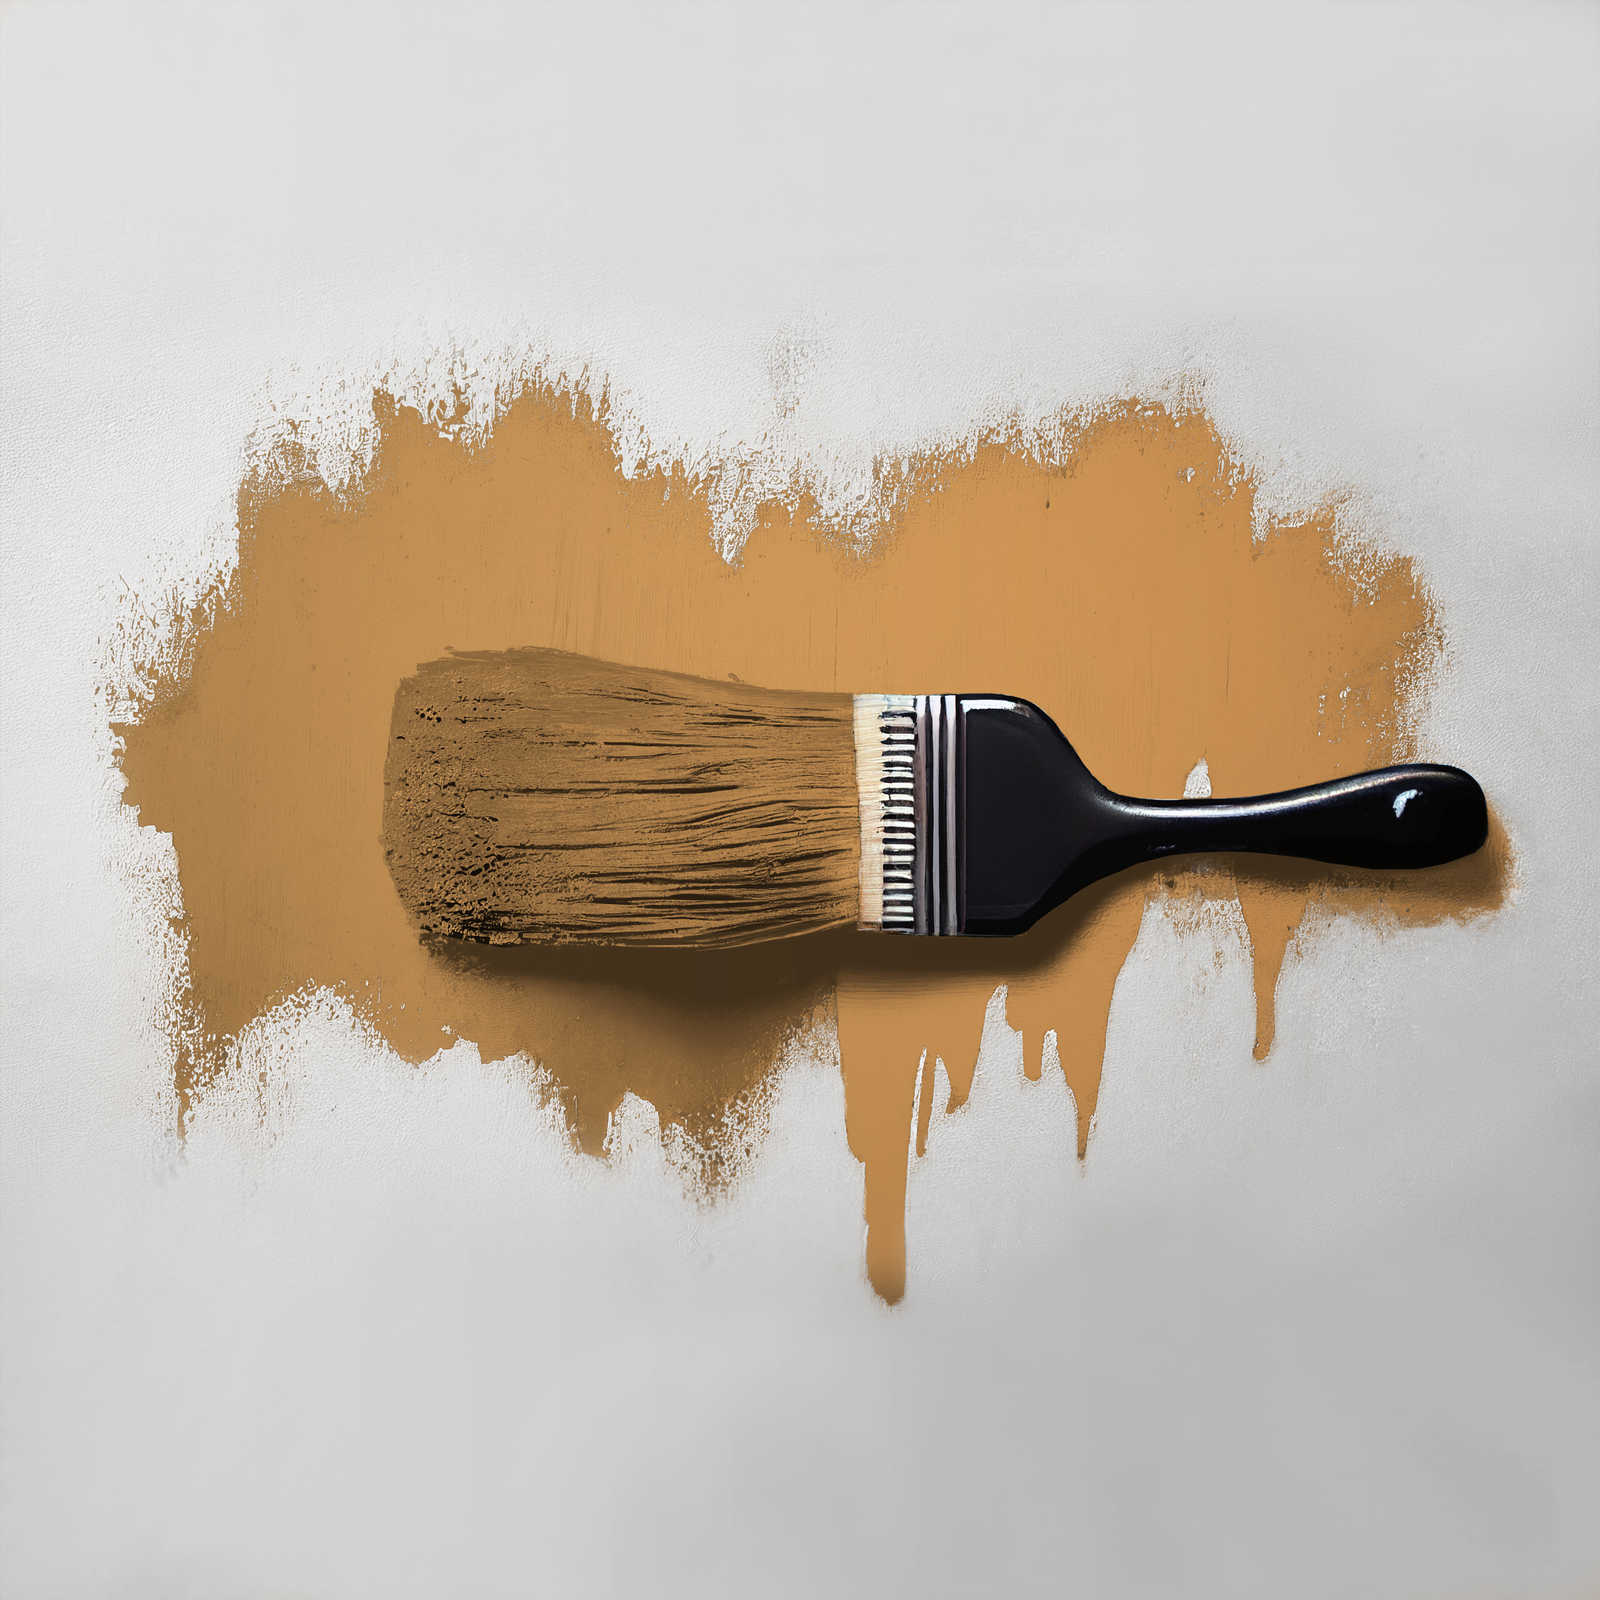             Peinture murale TCK5007 »Salted Caramel« en caramel intense – 2,5 litres
        